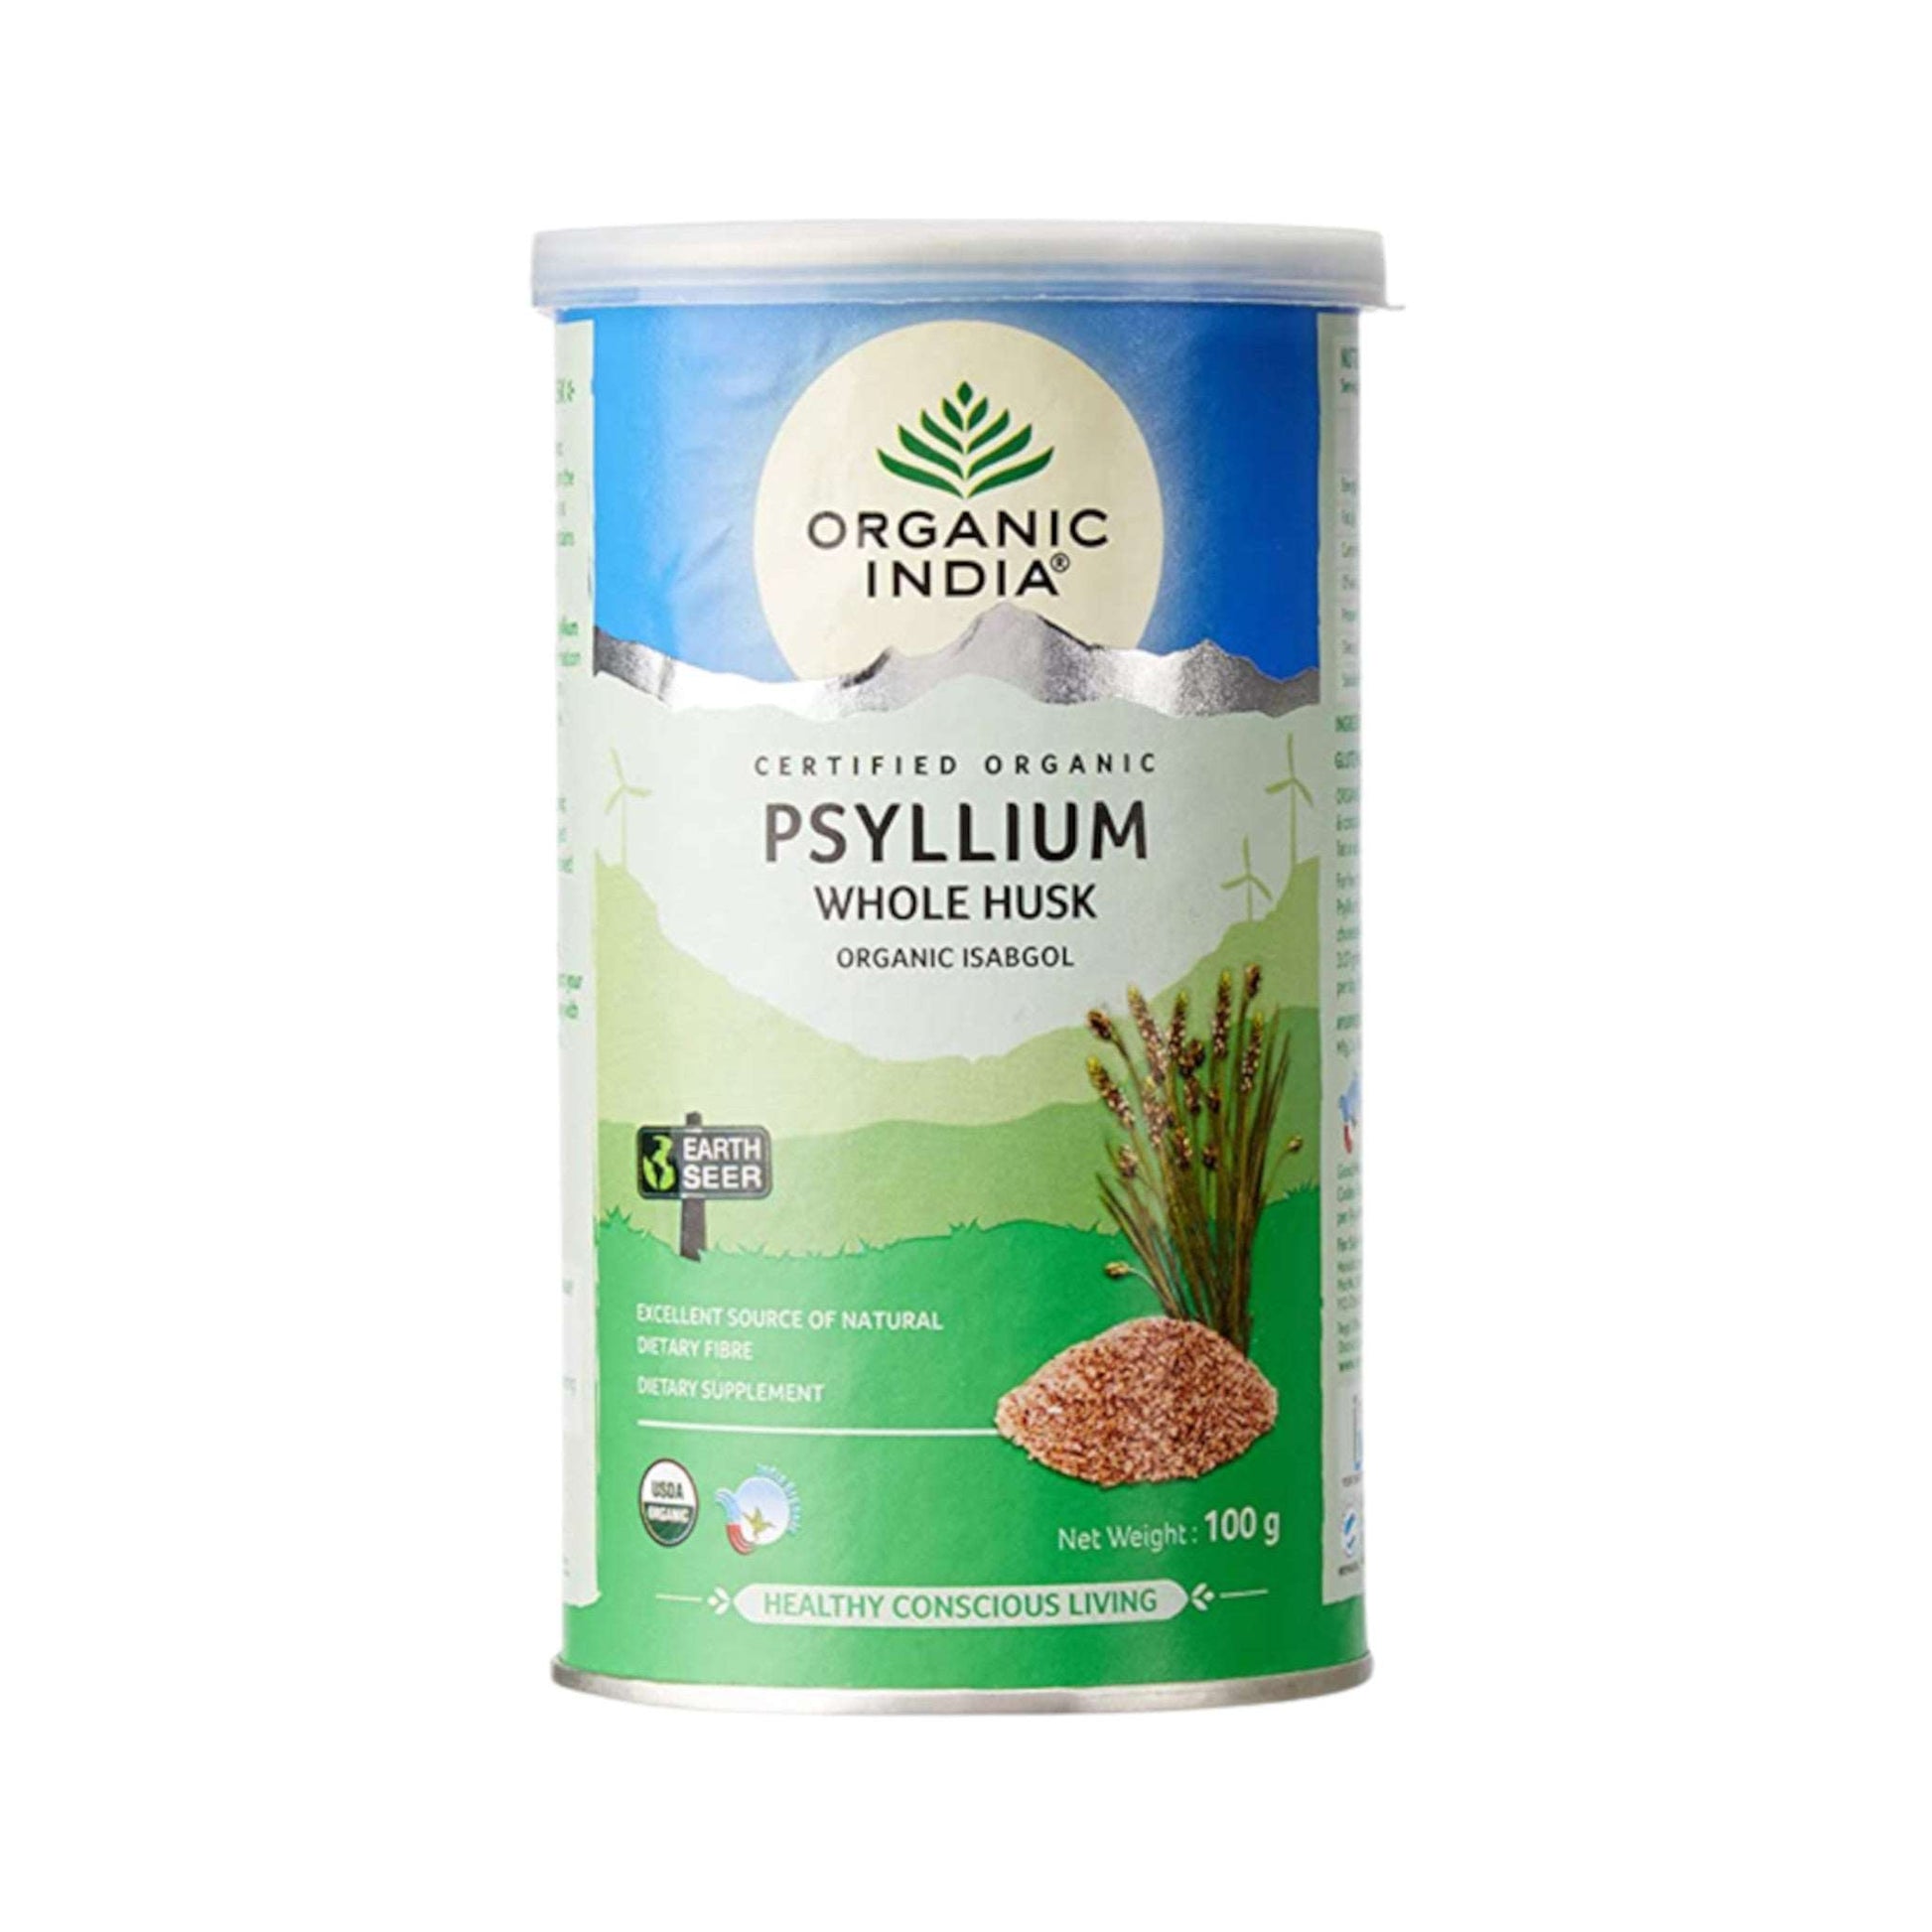 Image: Organic India Psyllium Whole Husk Powder 100 g: Natural dietary fiber for digestive health.